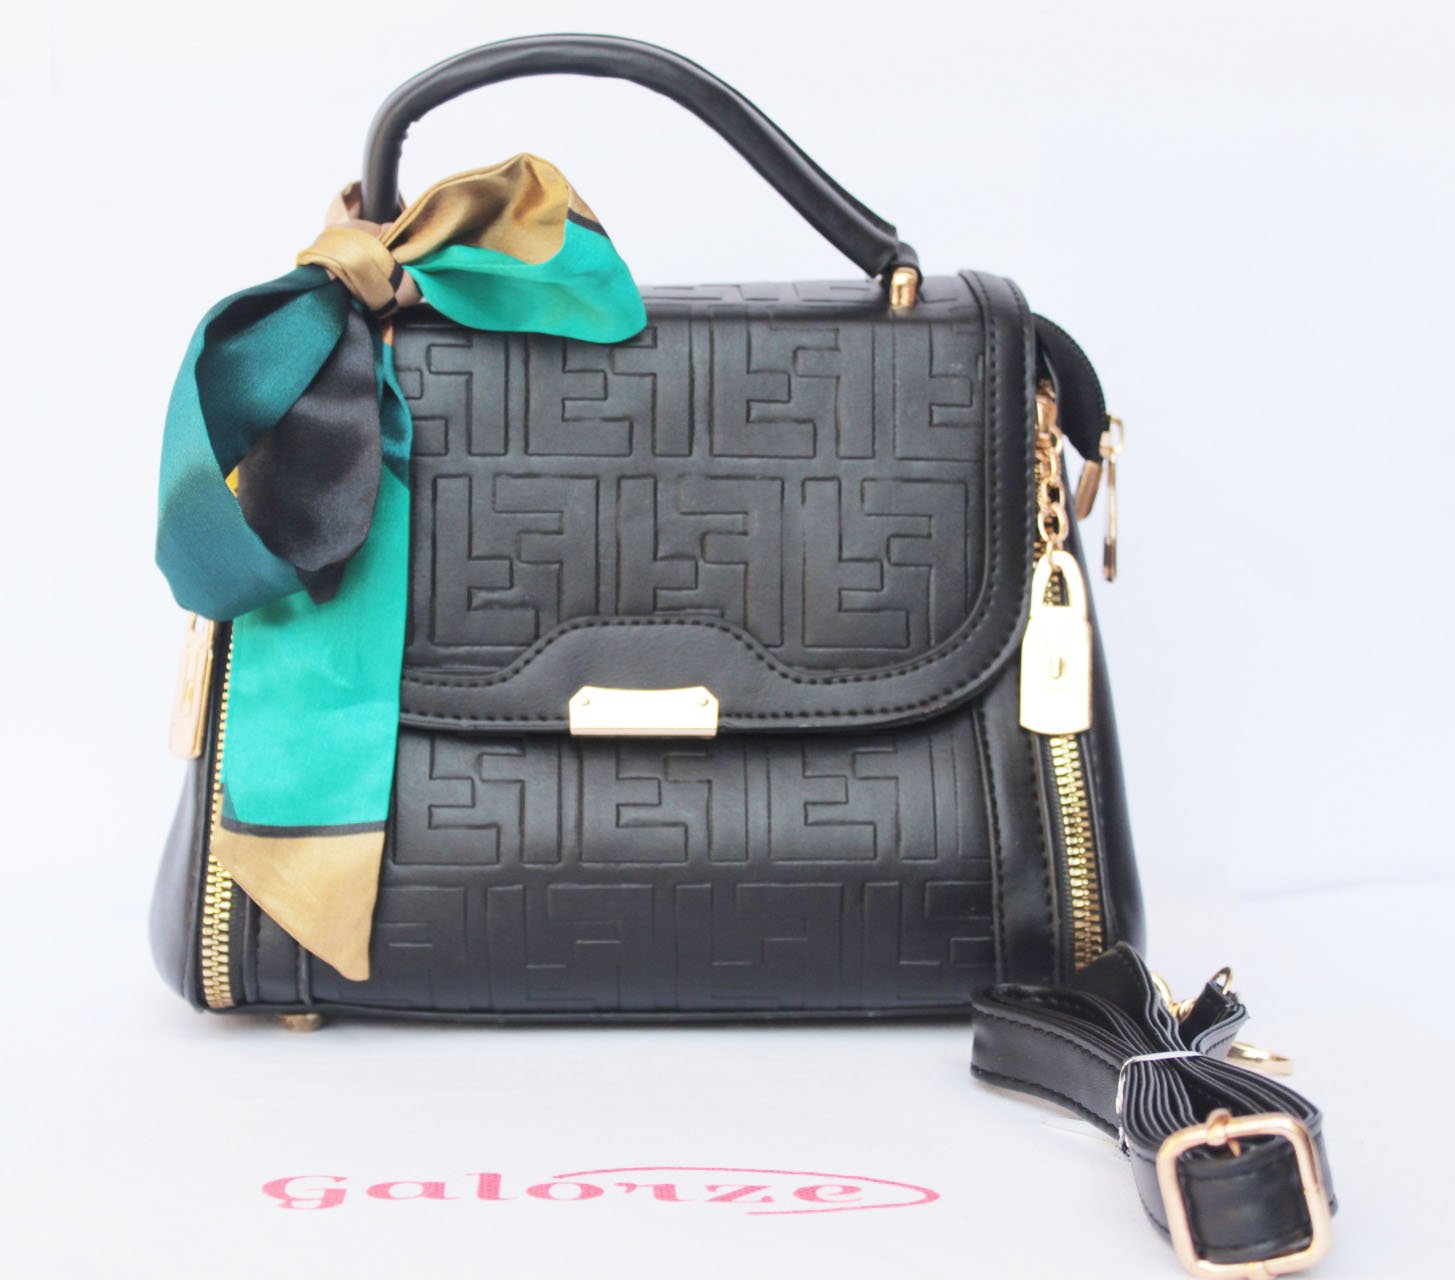 black arbor crossbody bag, compact size ,stylish and fashionable bag for girls.